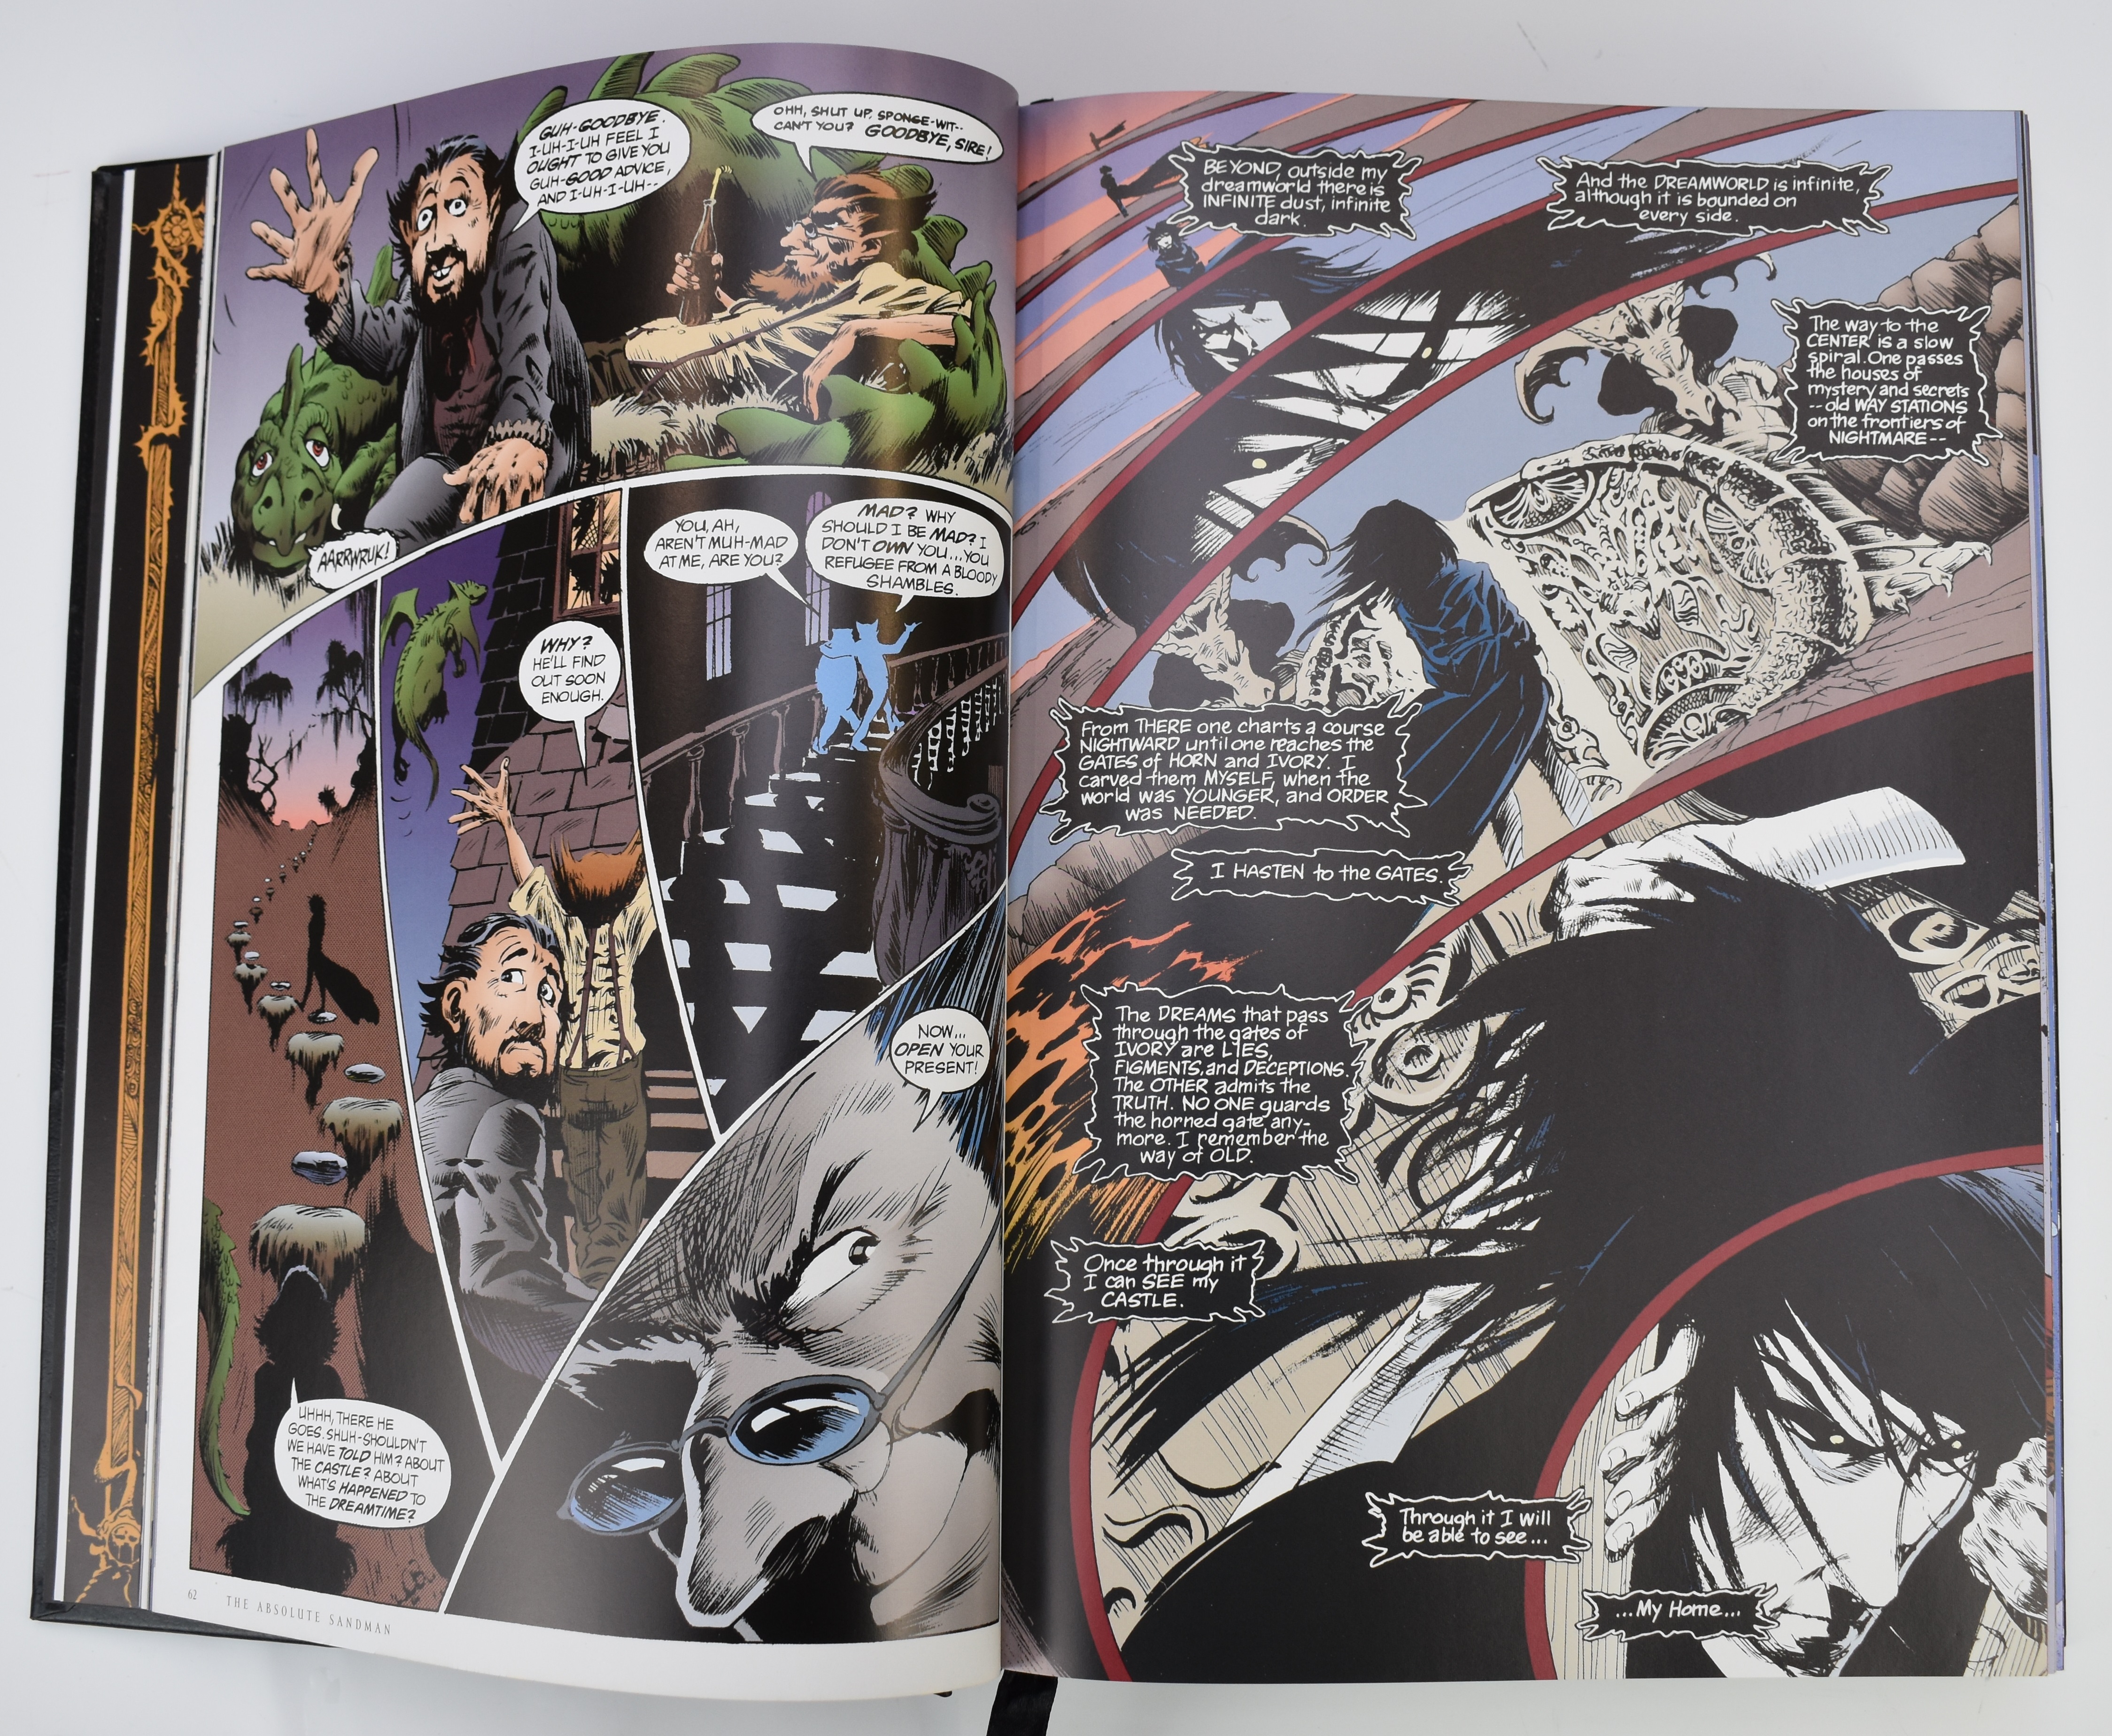 Neil Gaiman The Absolute Sandman (DC comic book), volumes 1-3 Vertigo 2006-2008 fully illustrated in - Image 3 of 6